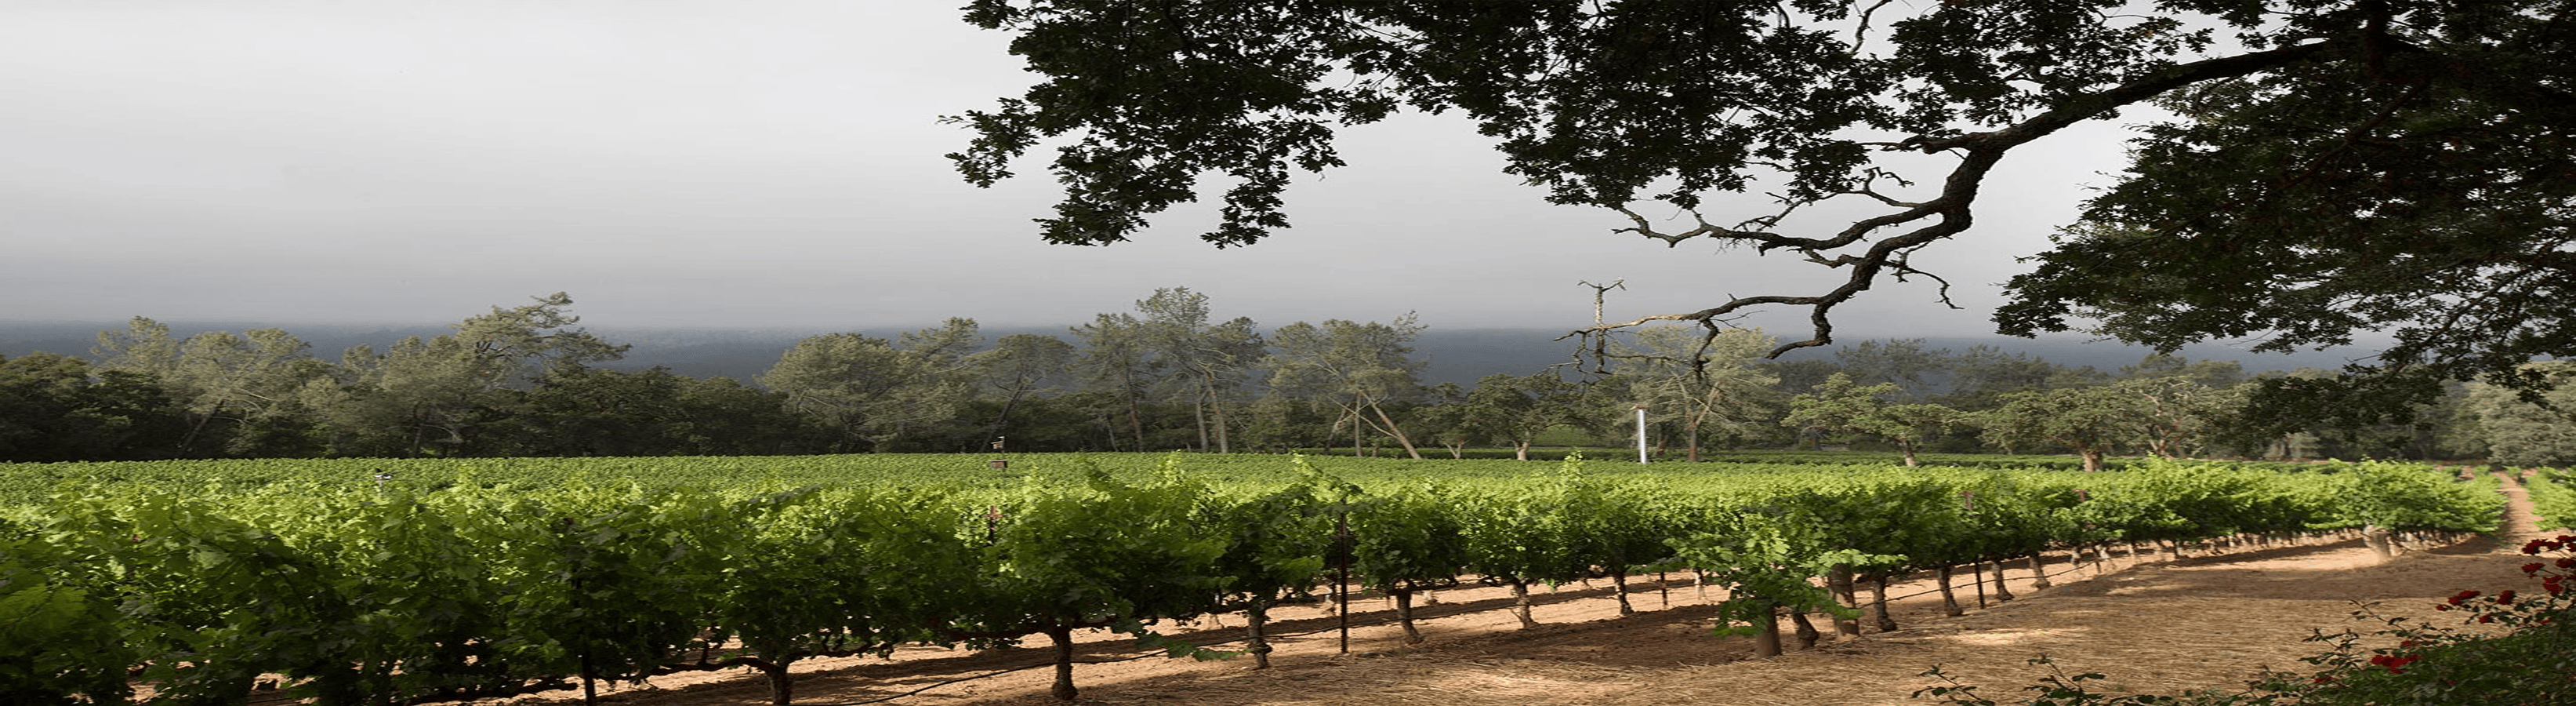 hourglass estate wines